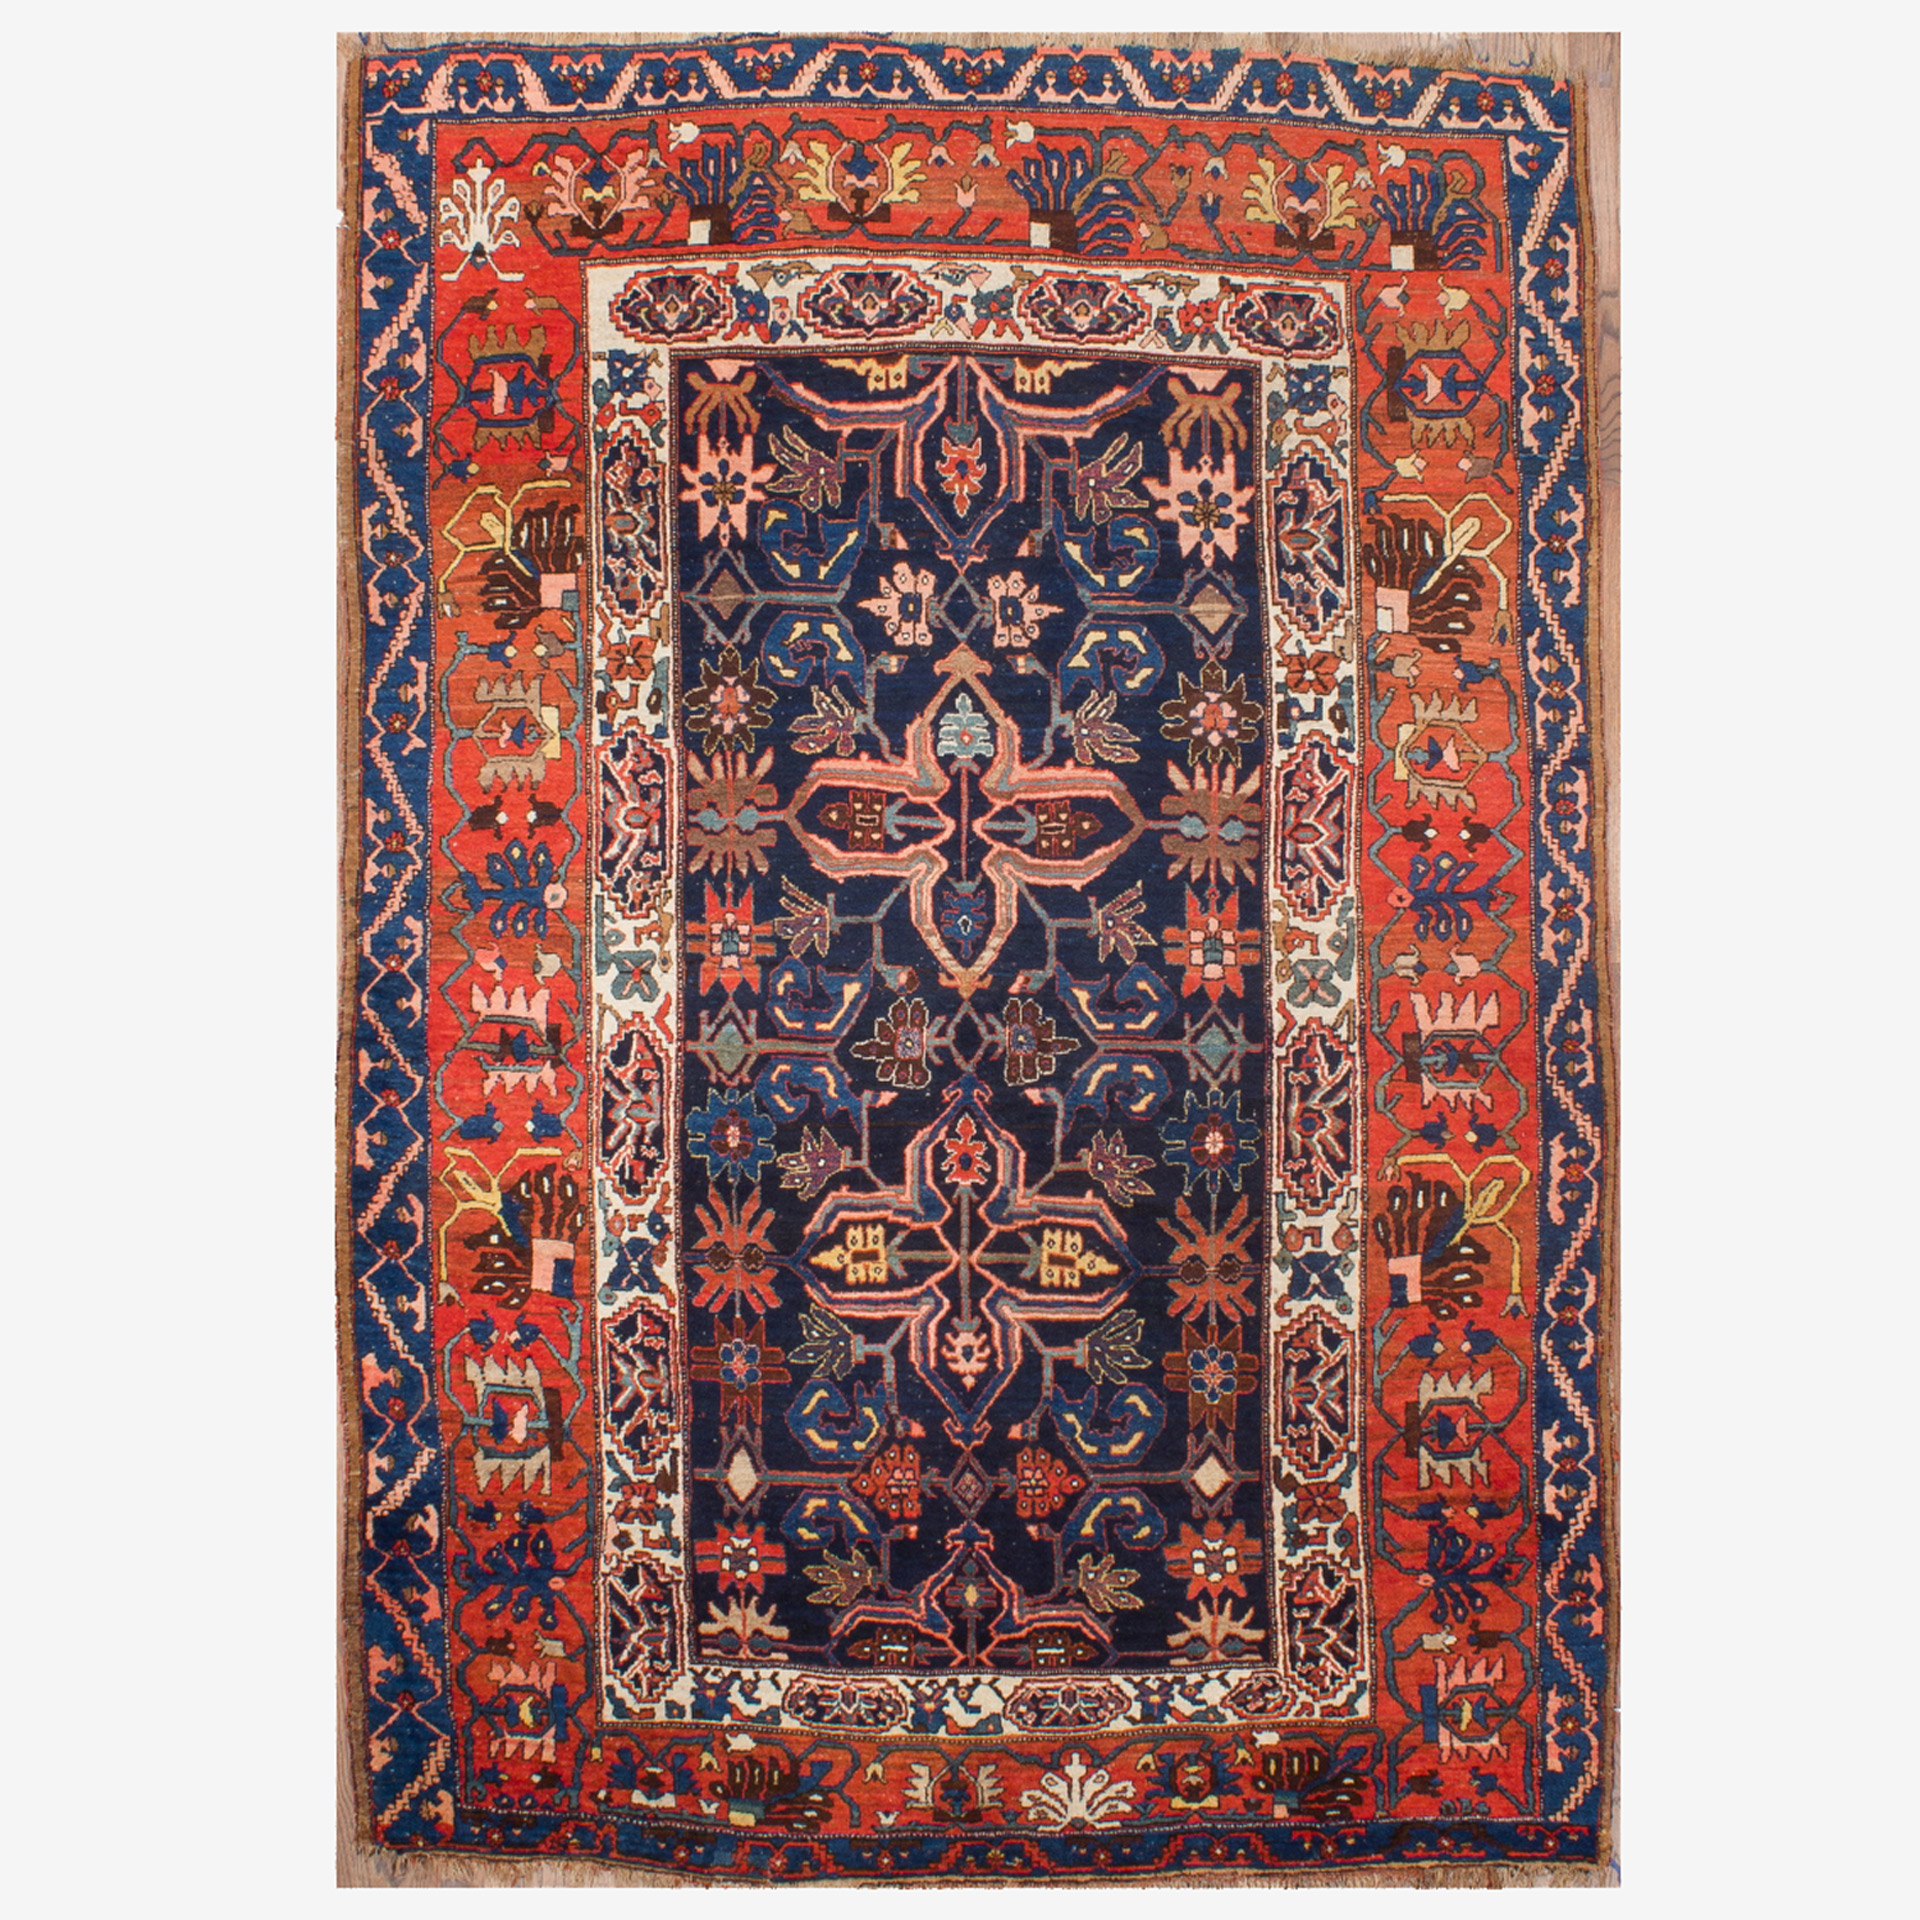 An antique Kurdish carpet from Bidjar in northwest Persia, featuring the Quatrefoil design on a navy field